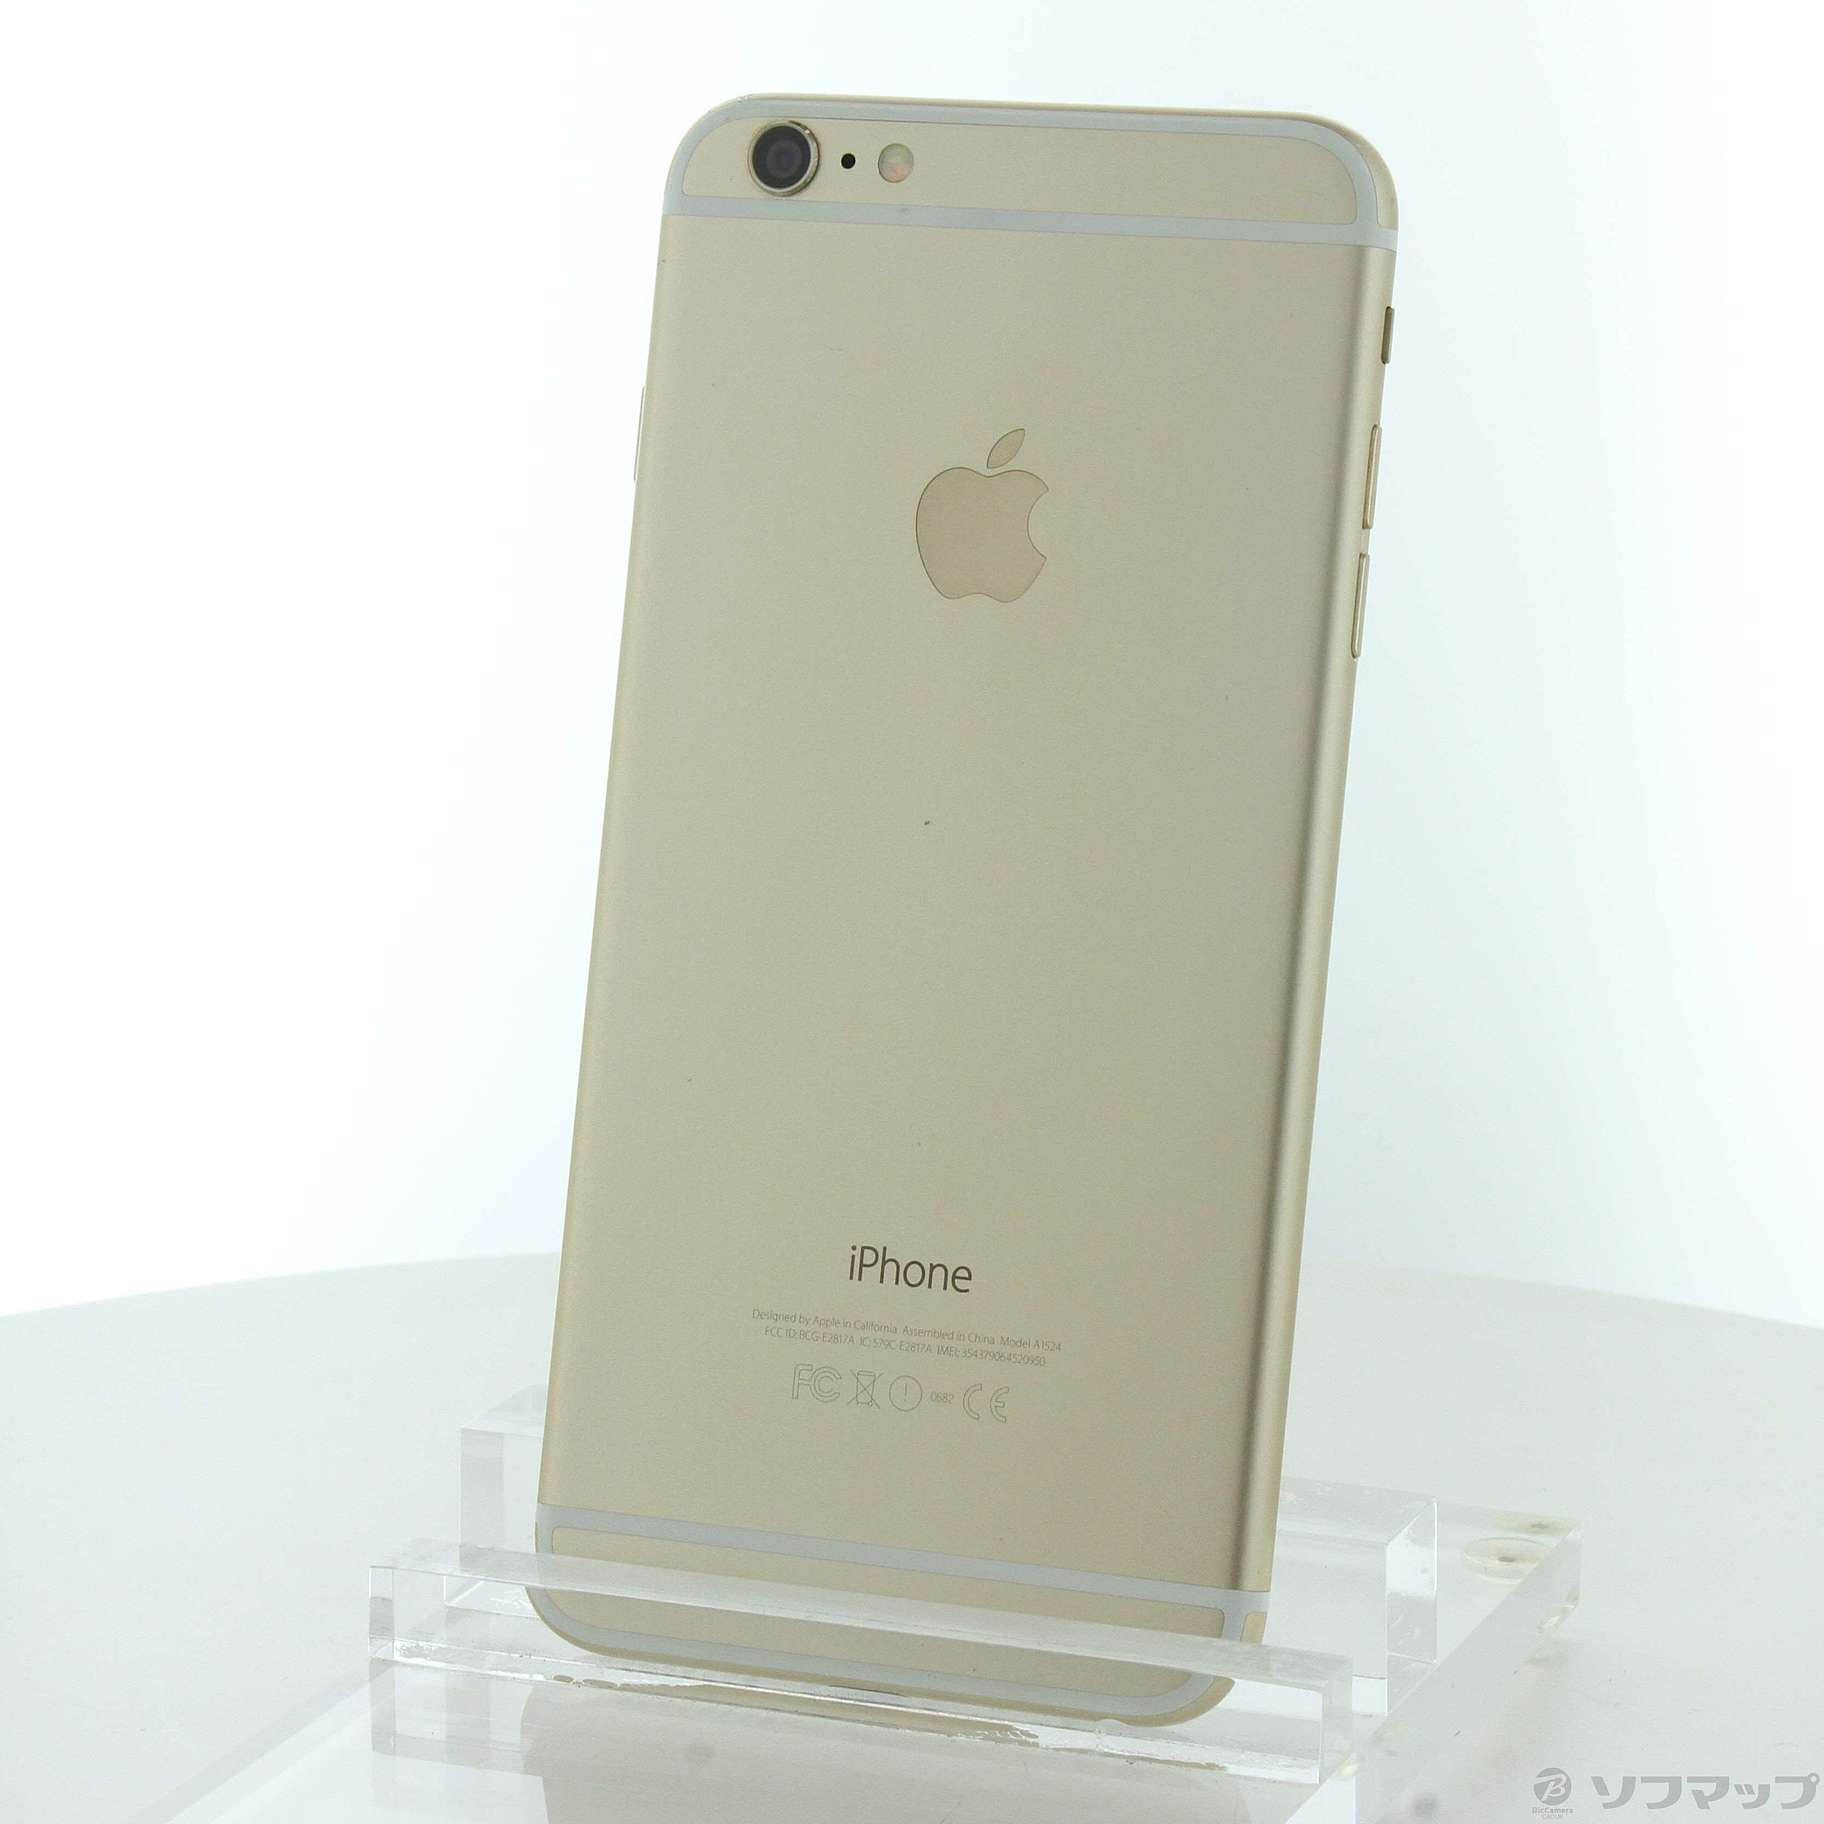 iPhone 6 plus 16GB ソフトバンク iPhone6 plus - スマートフォン本体